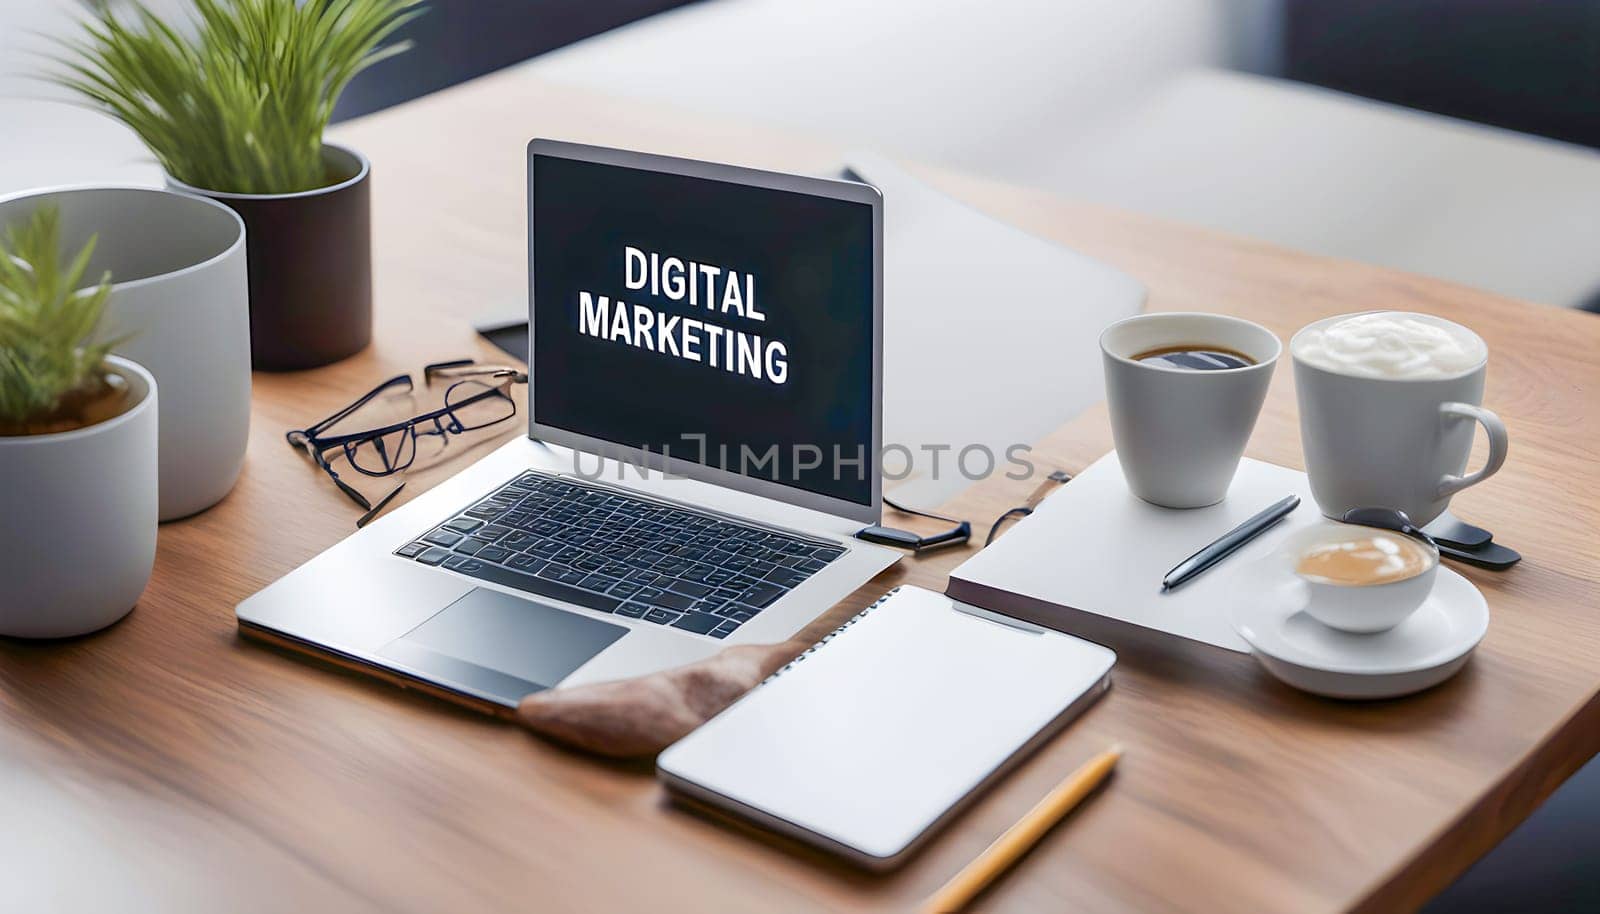 Digital Marketing Concept on Laptop Screen by rostik924